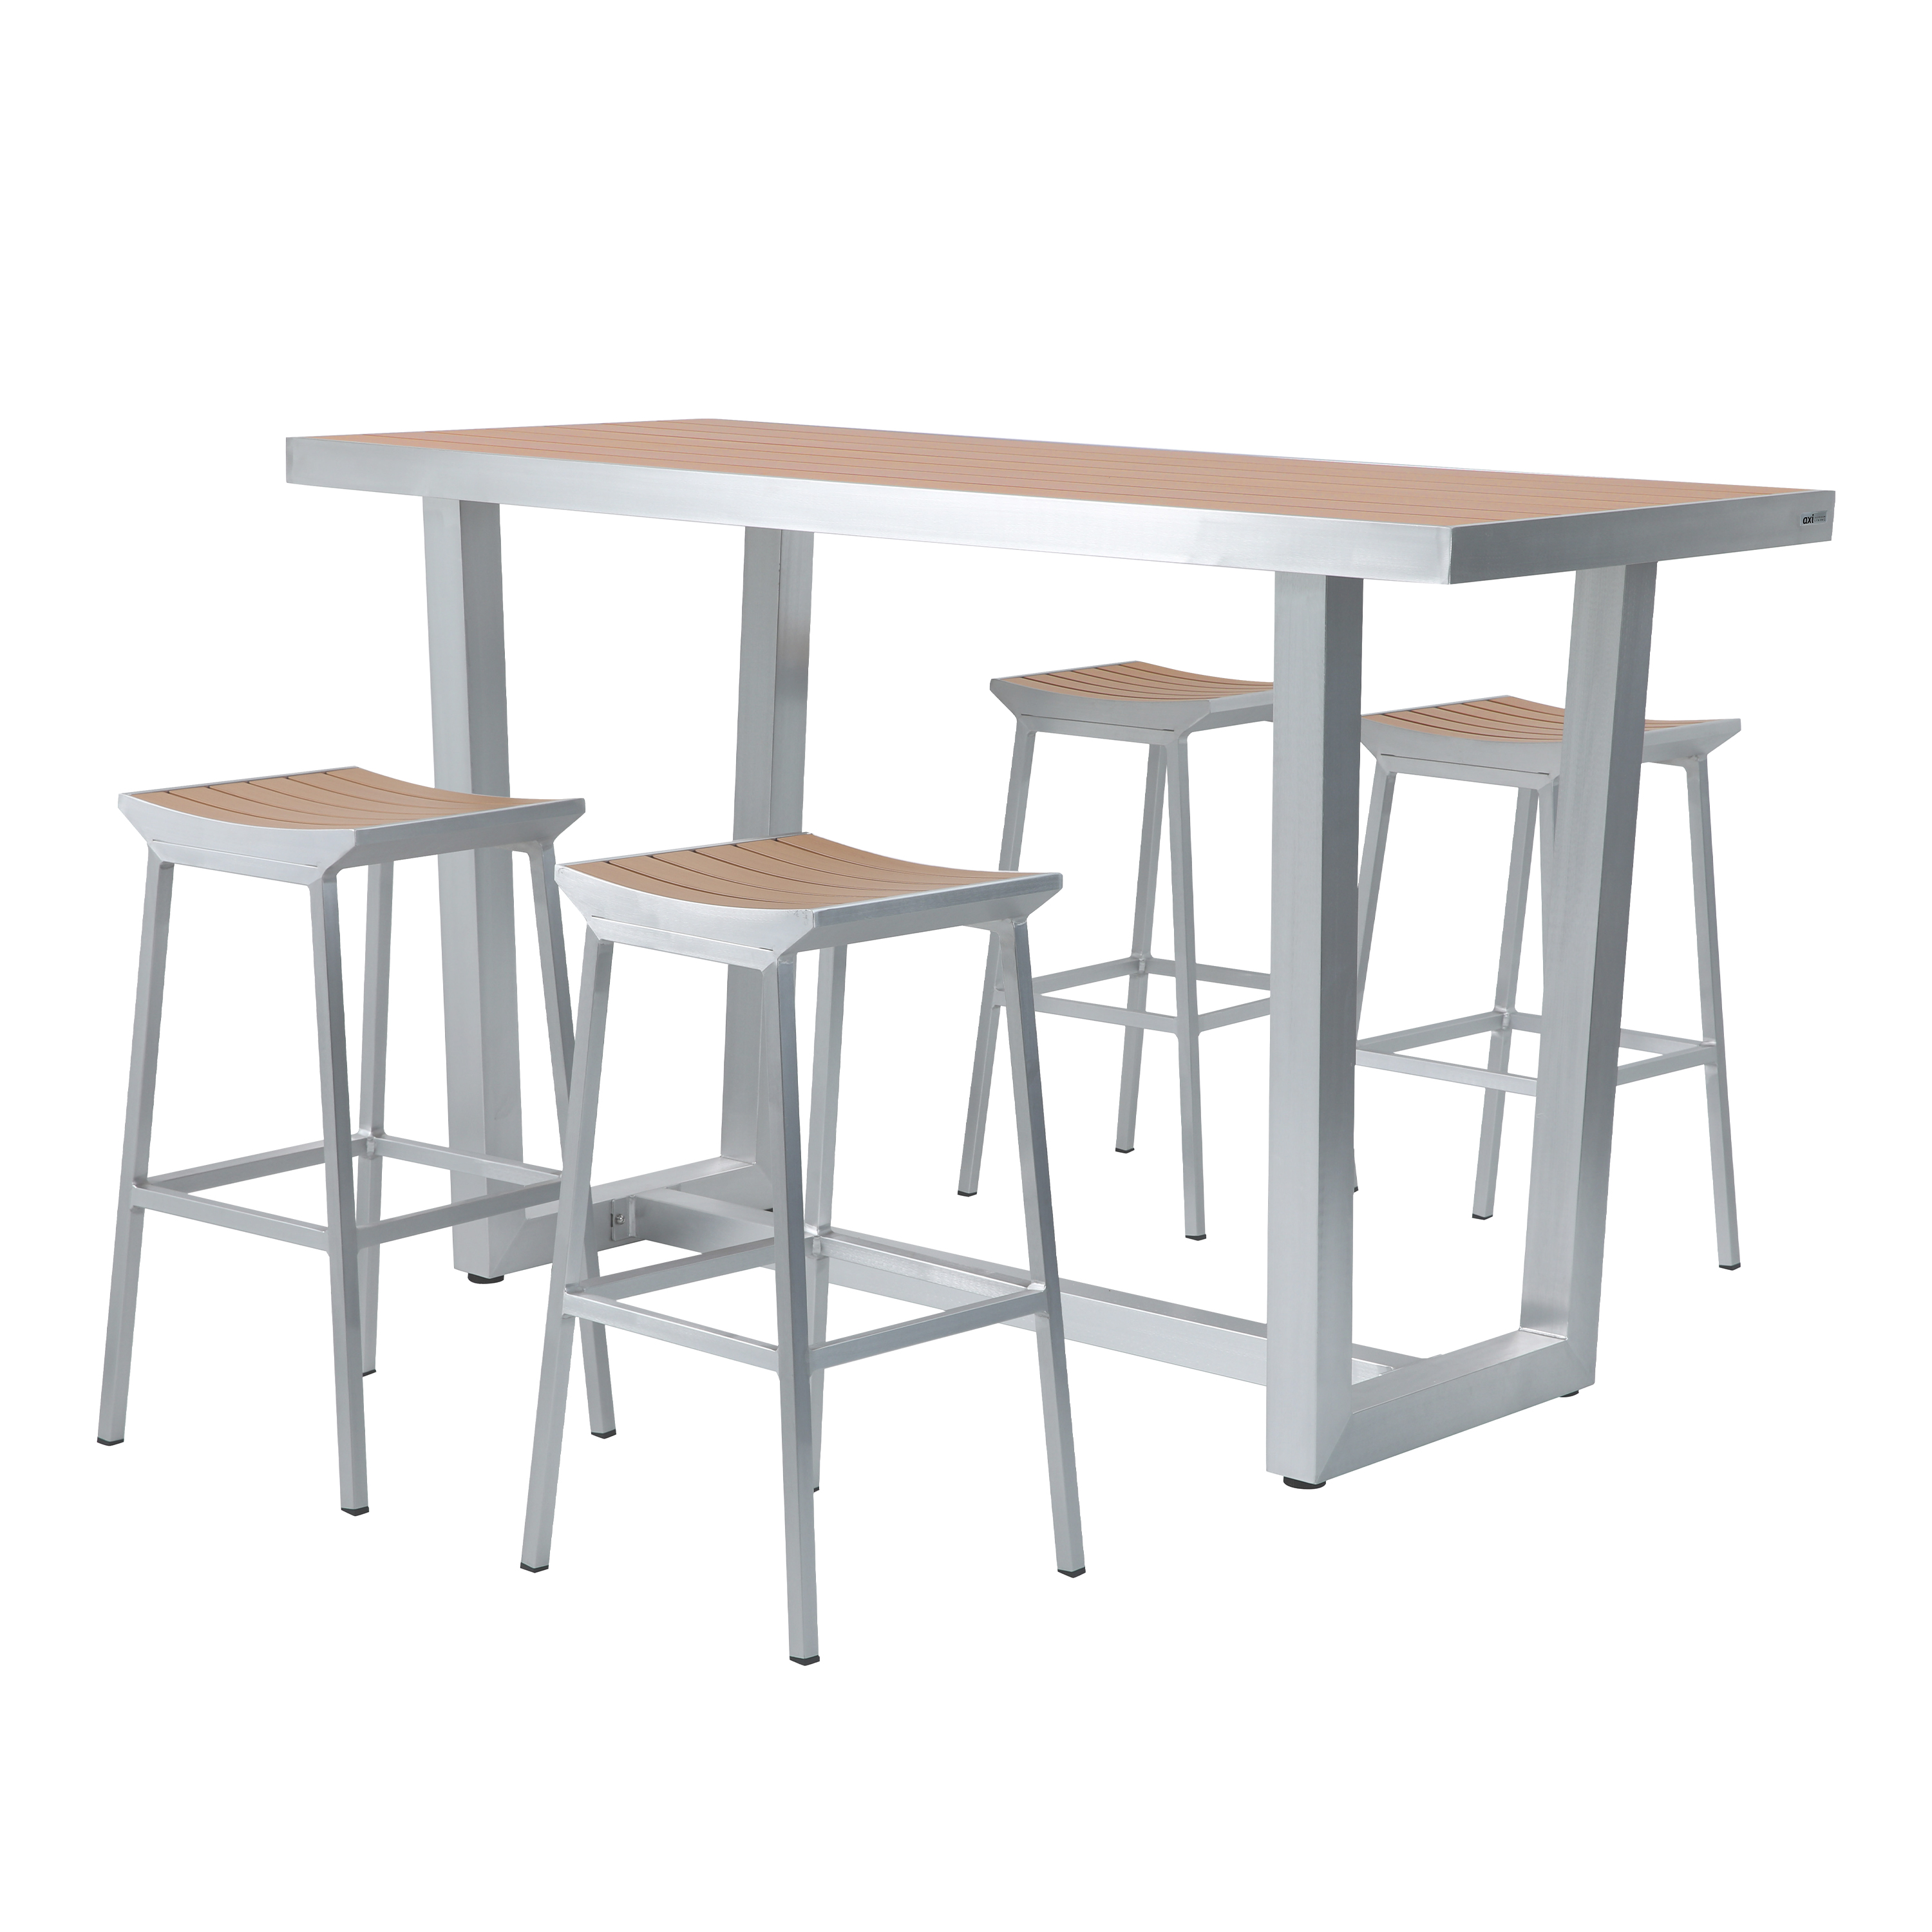 AXI James Bar set with 4 bar stools Aluminium/wood-look